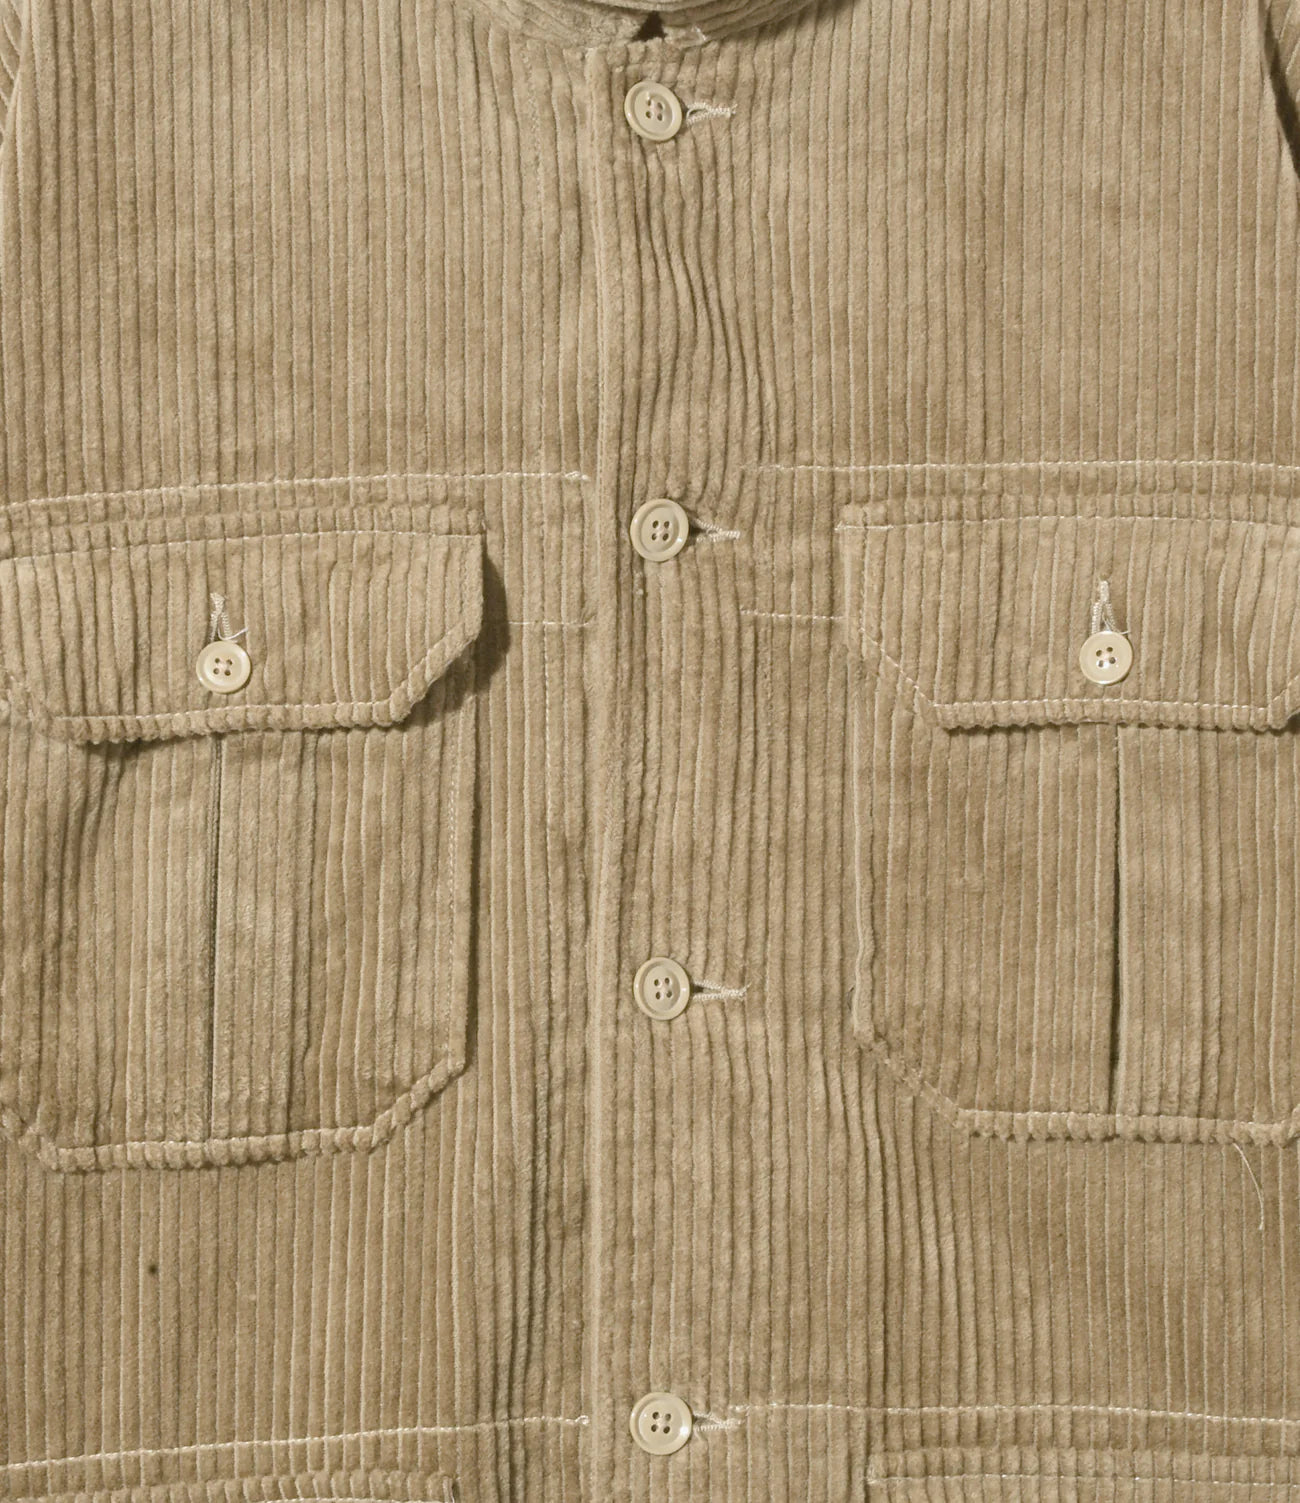 Engineered Garments Suffolk Shirt JK - 4.5W Corduroy